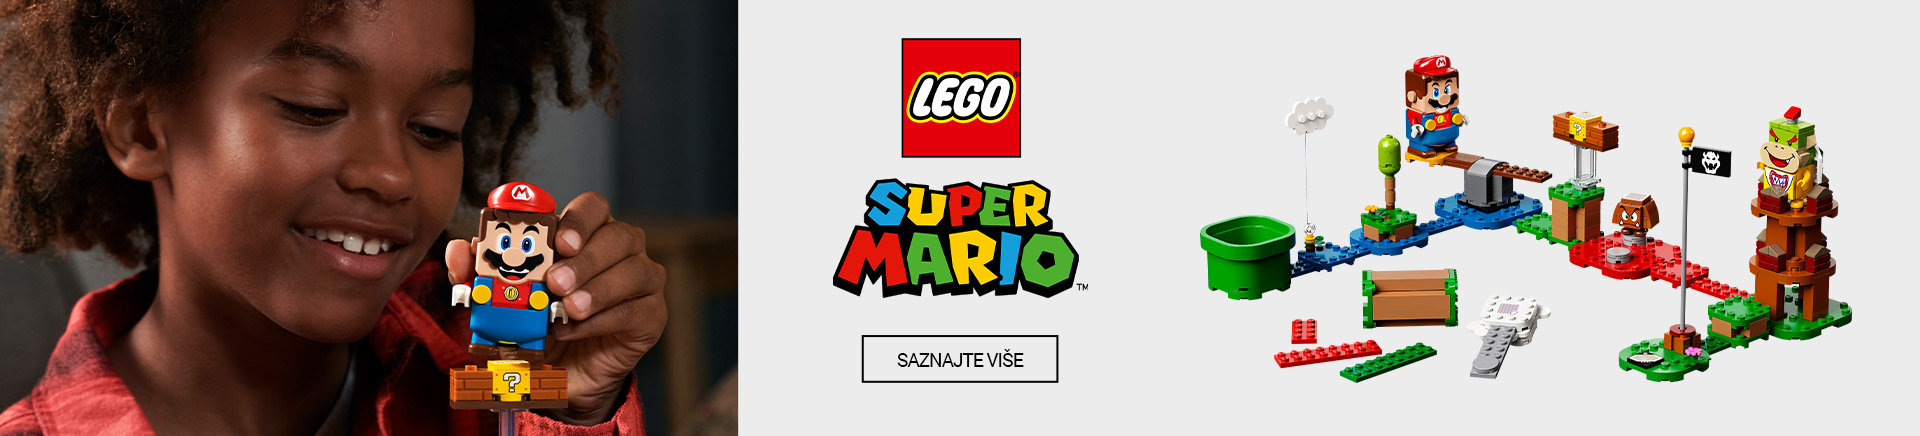 CG~Lego Super Mario TABLET 768 X 436.jpg